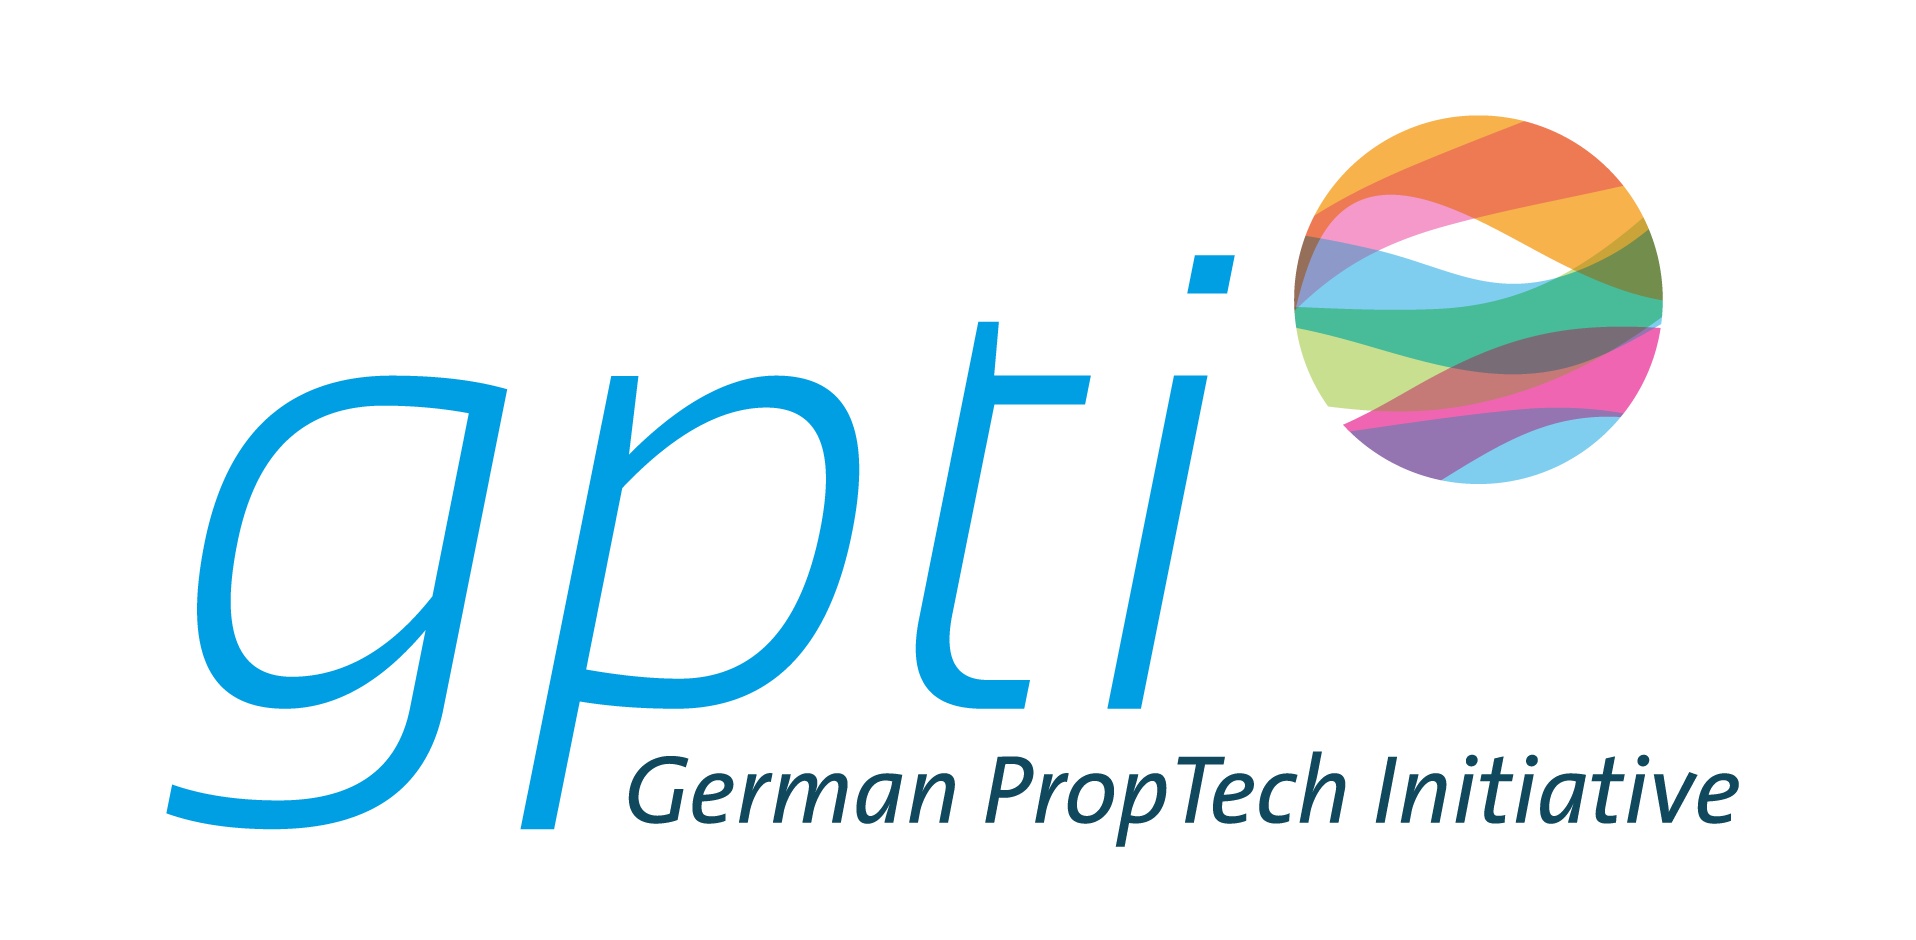 German PropTech Initiative (GPTI)